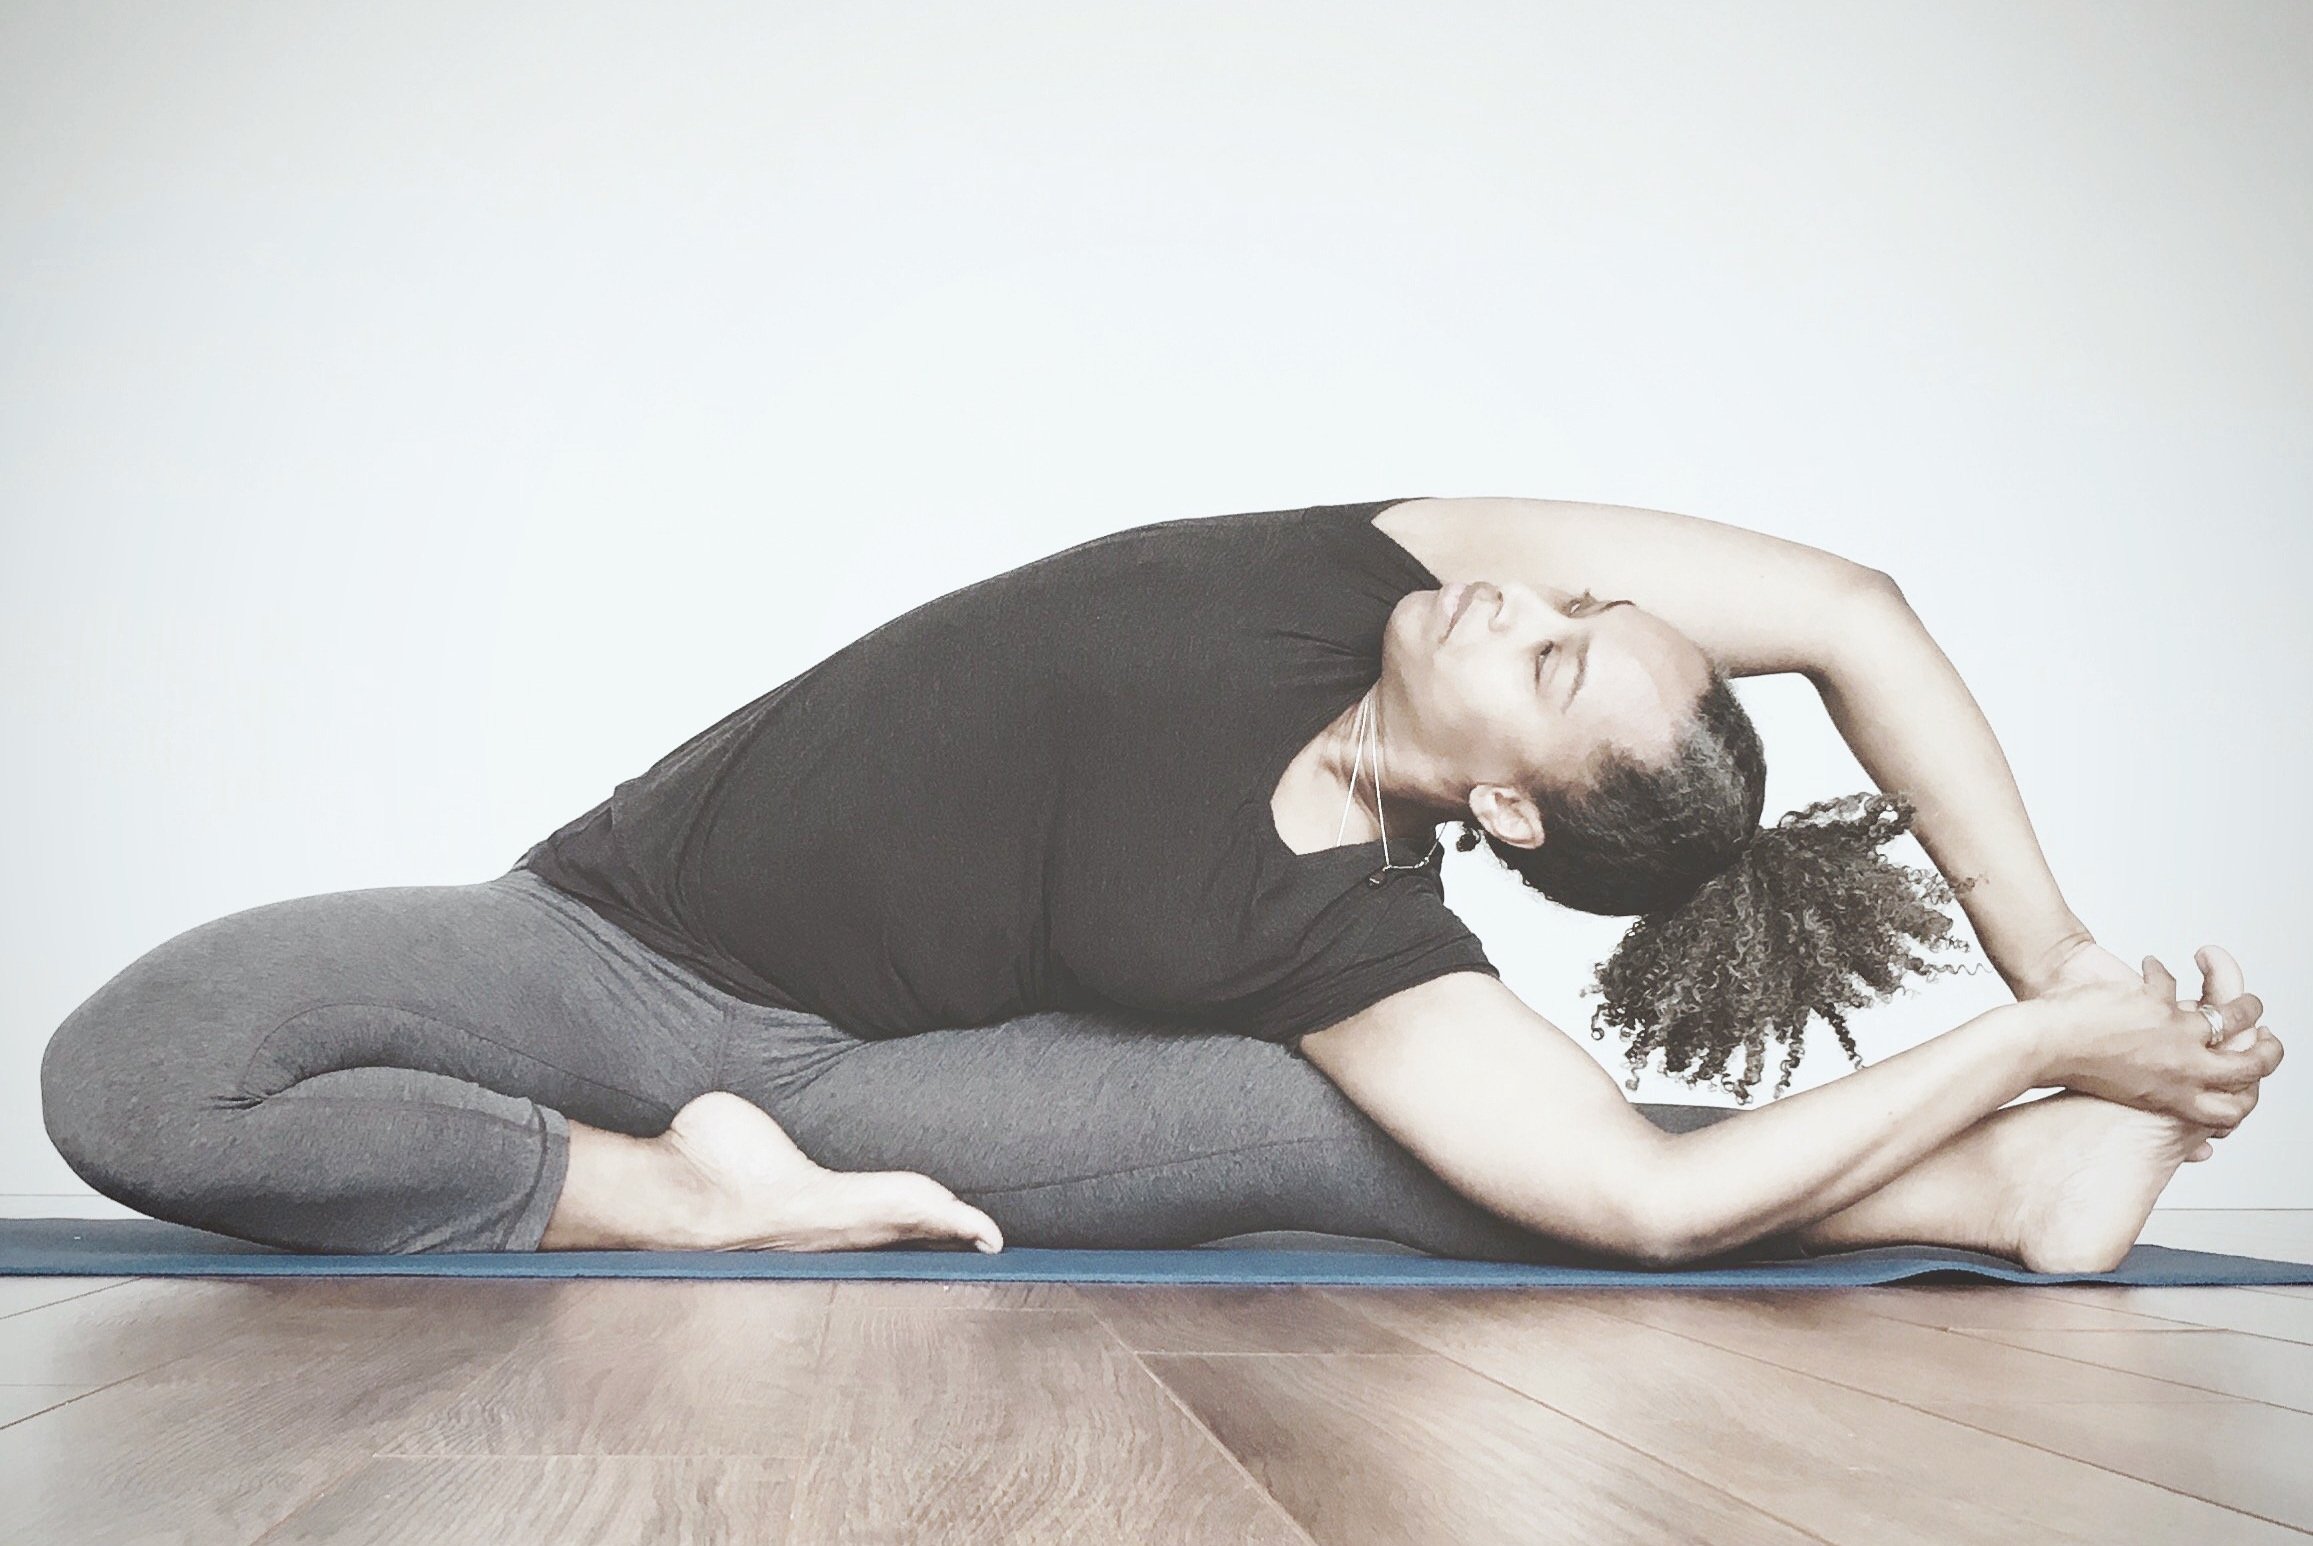 Fall Session — Prana Yoga Studio